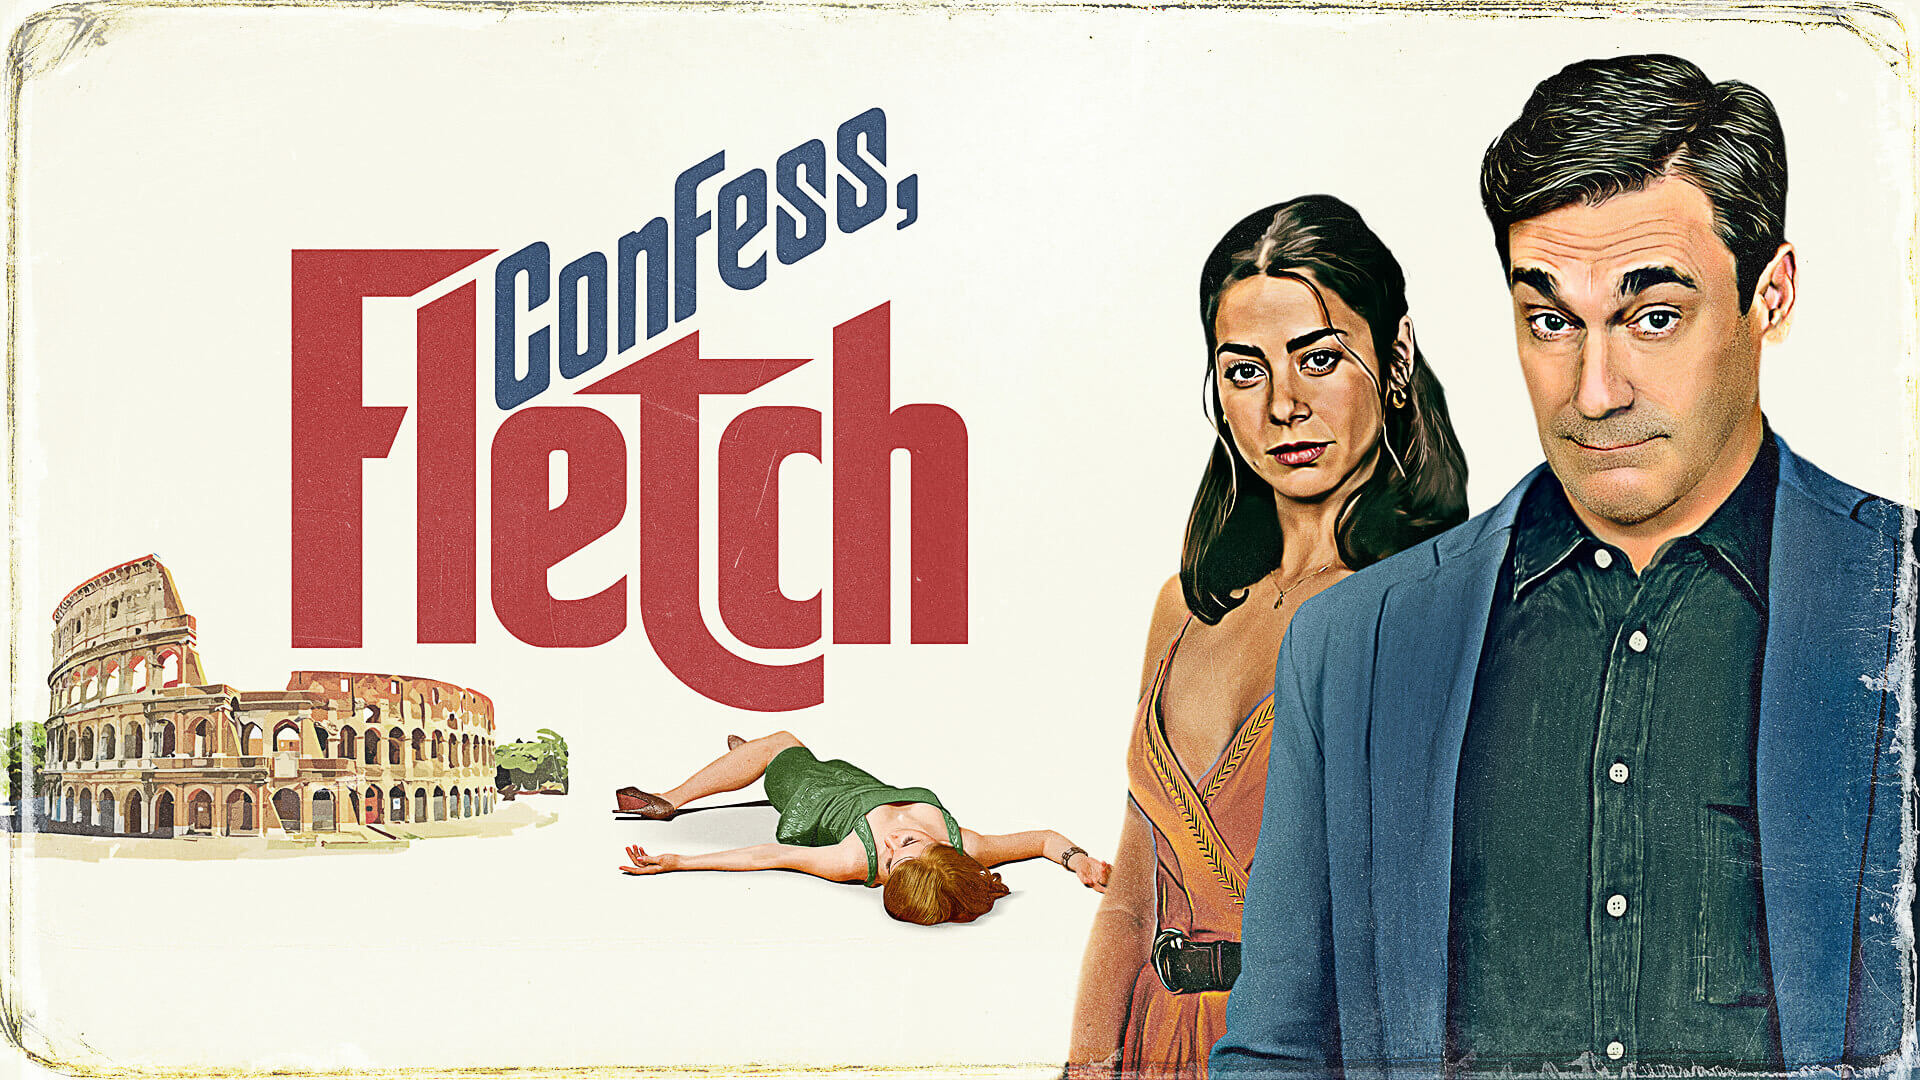 confess-fletch-movie-2022